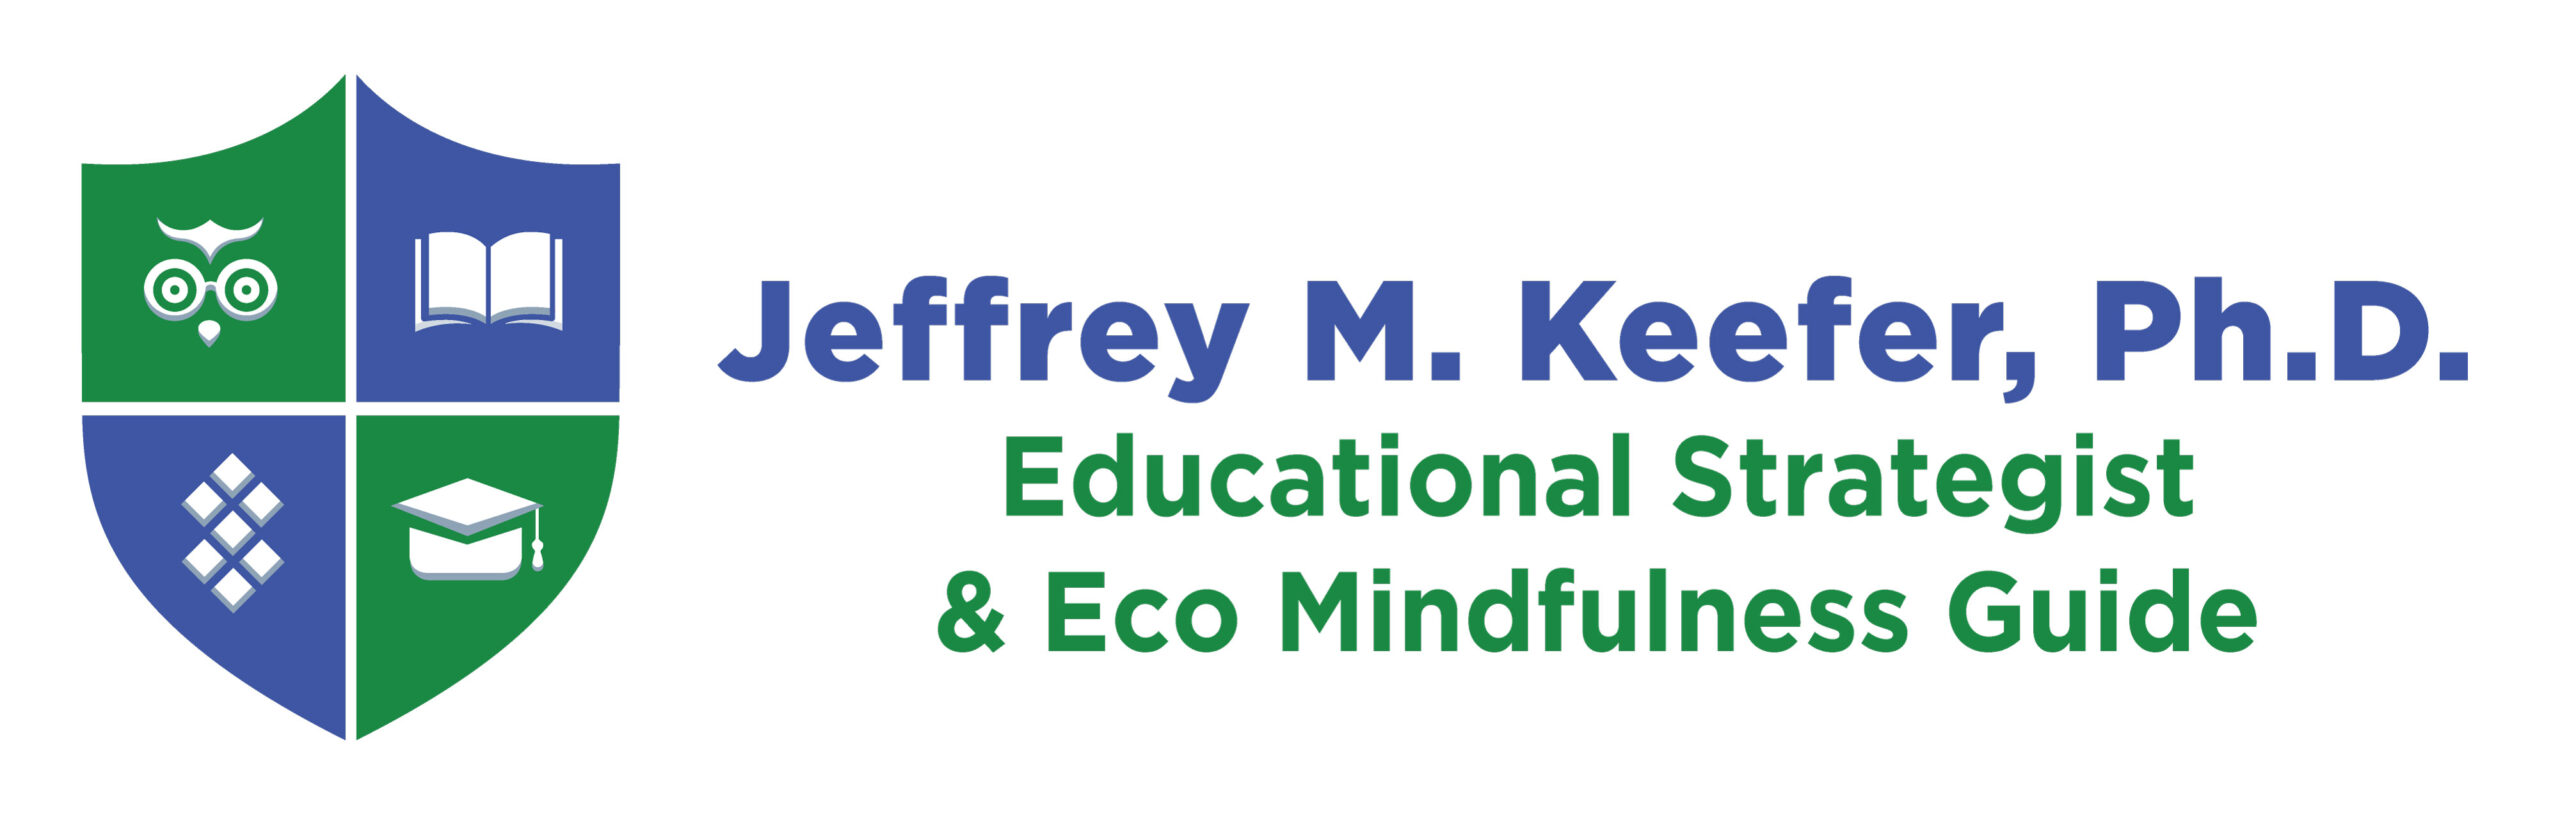 Jeffrey M. Keefer, Ph.D.